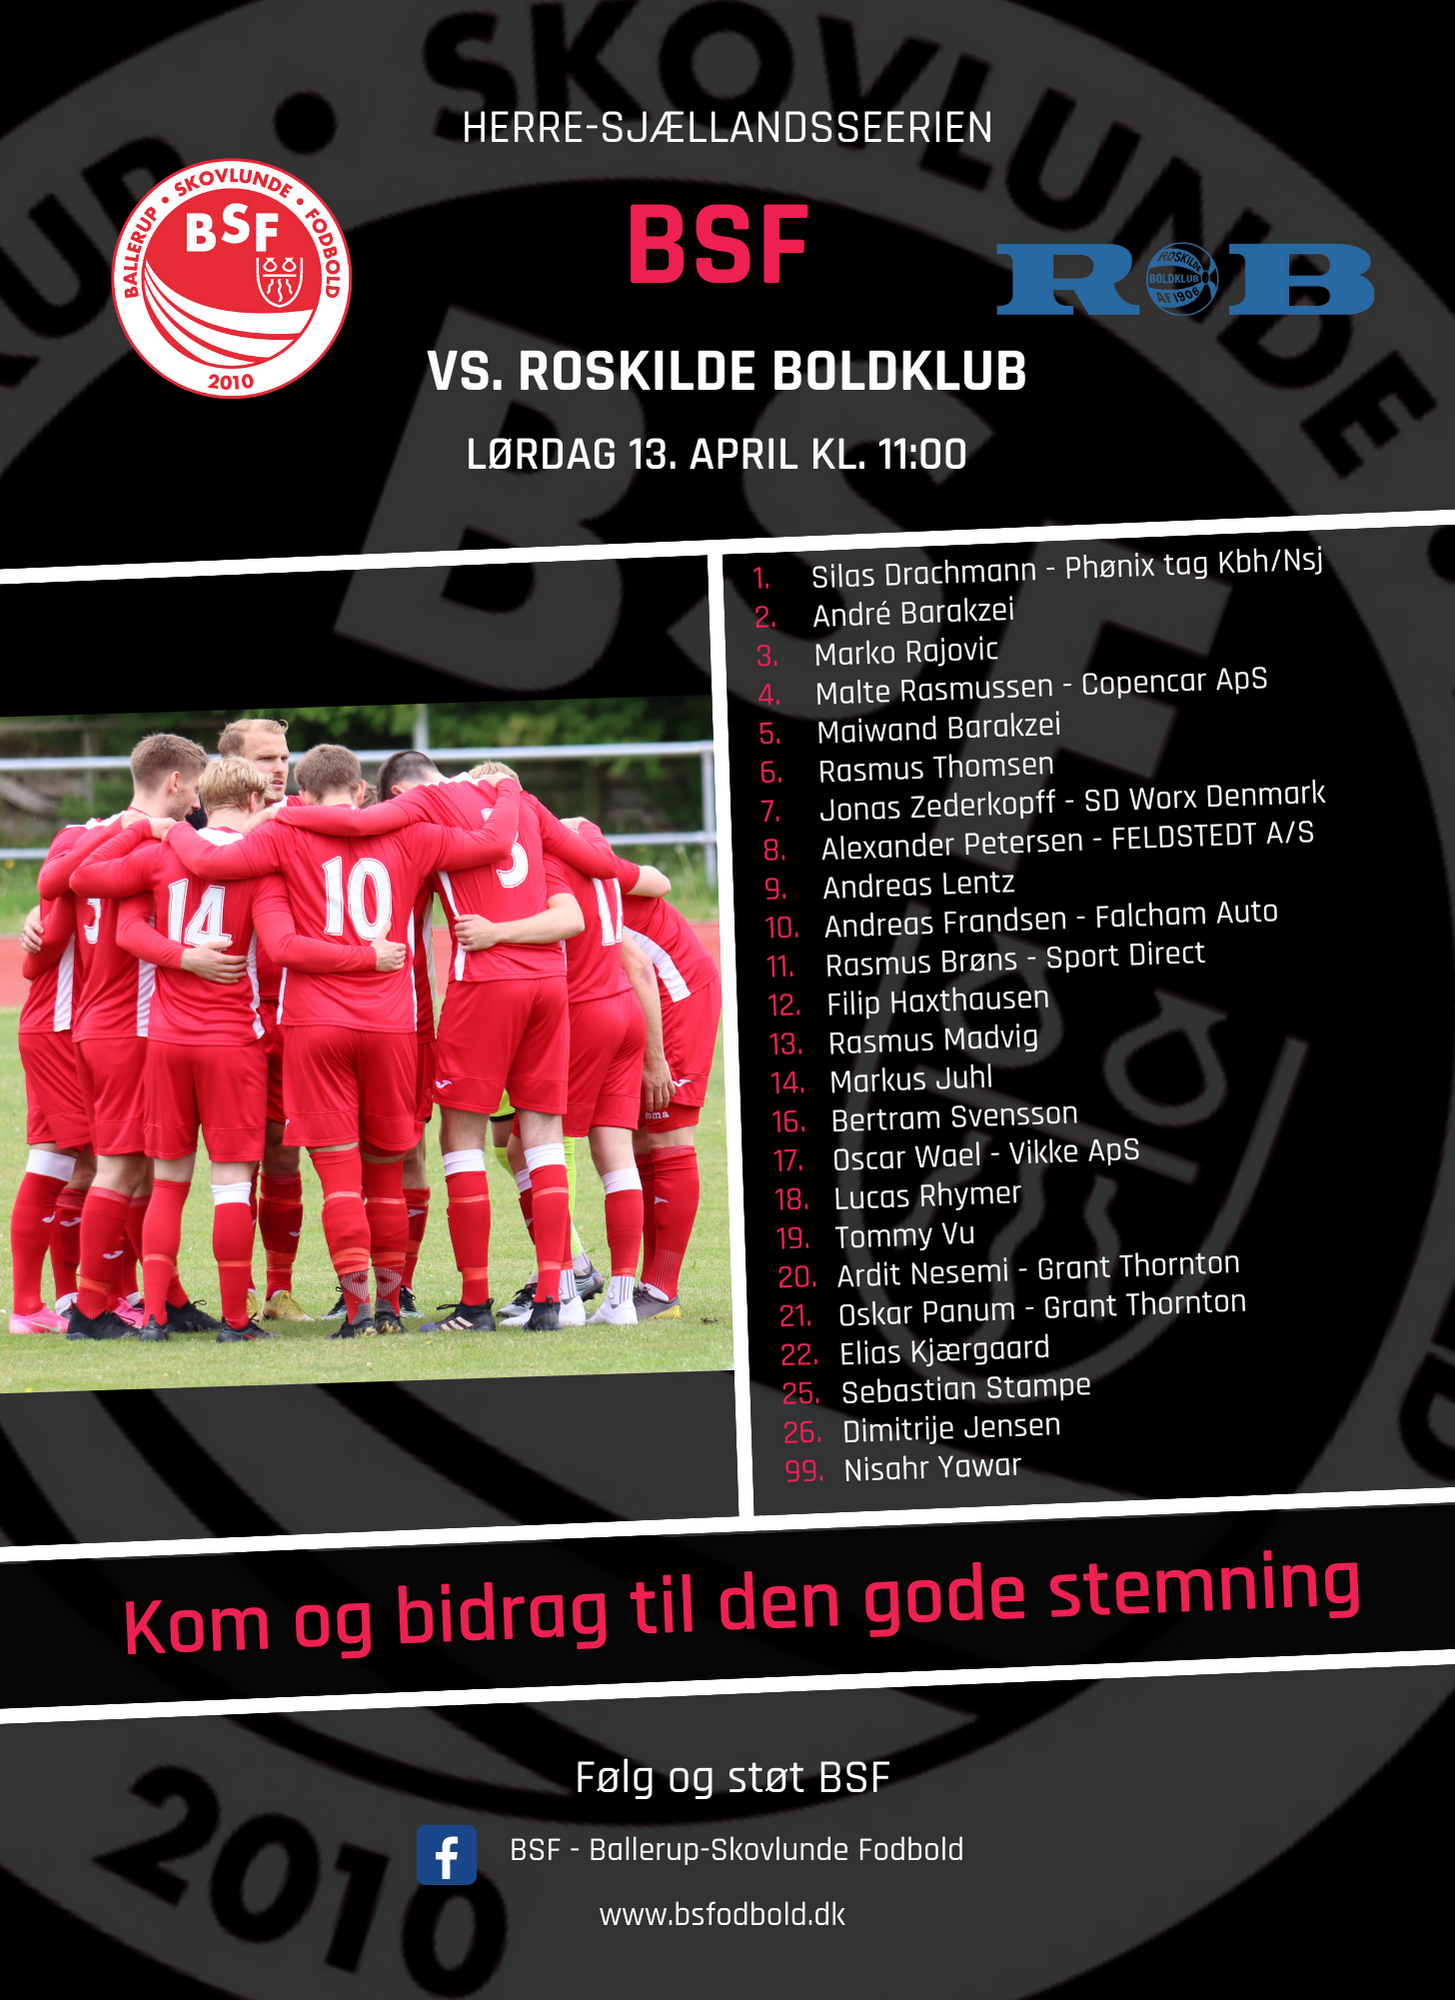 Herresenior 1 tager imod Roskilde Boldklub